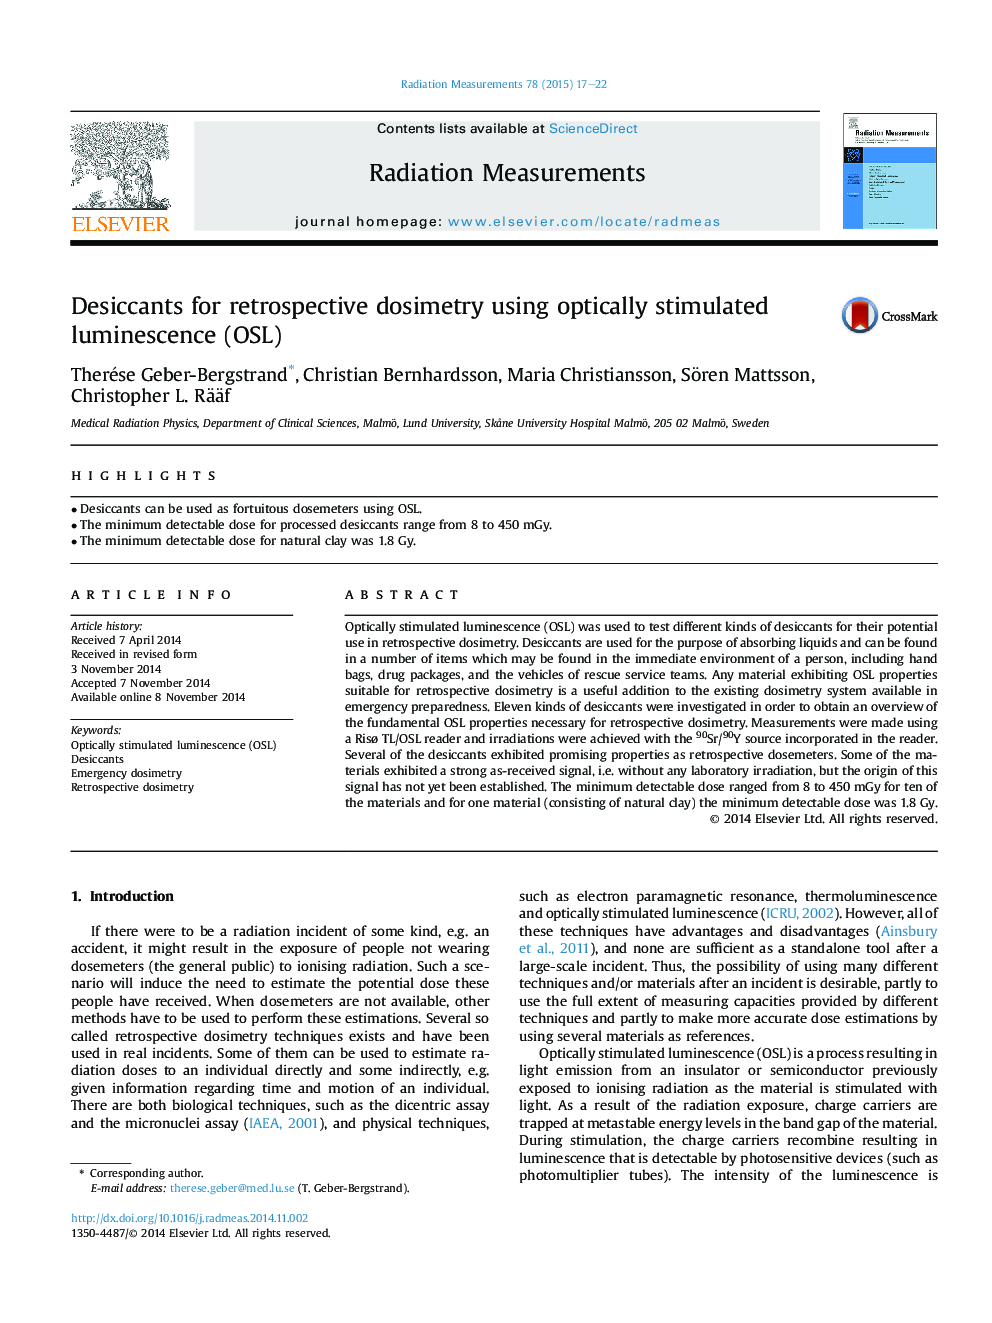 Desiccants for retrospective dosimetry using optically stimulated luminescence (OSL)